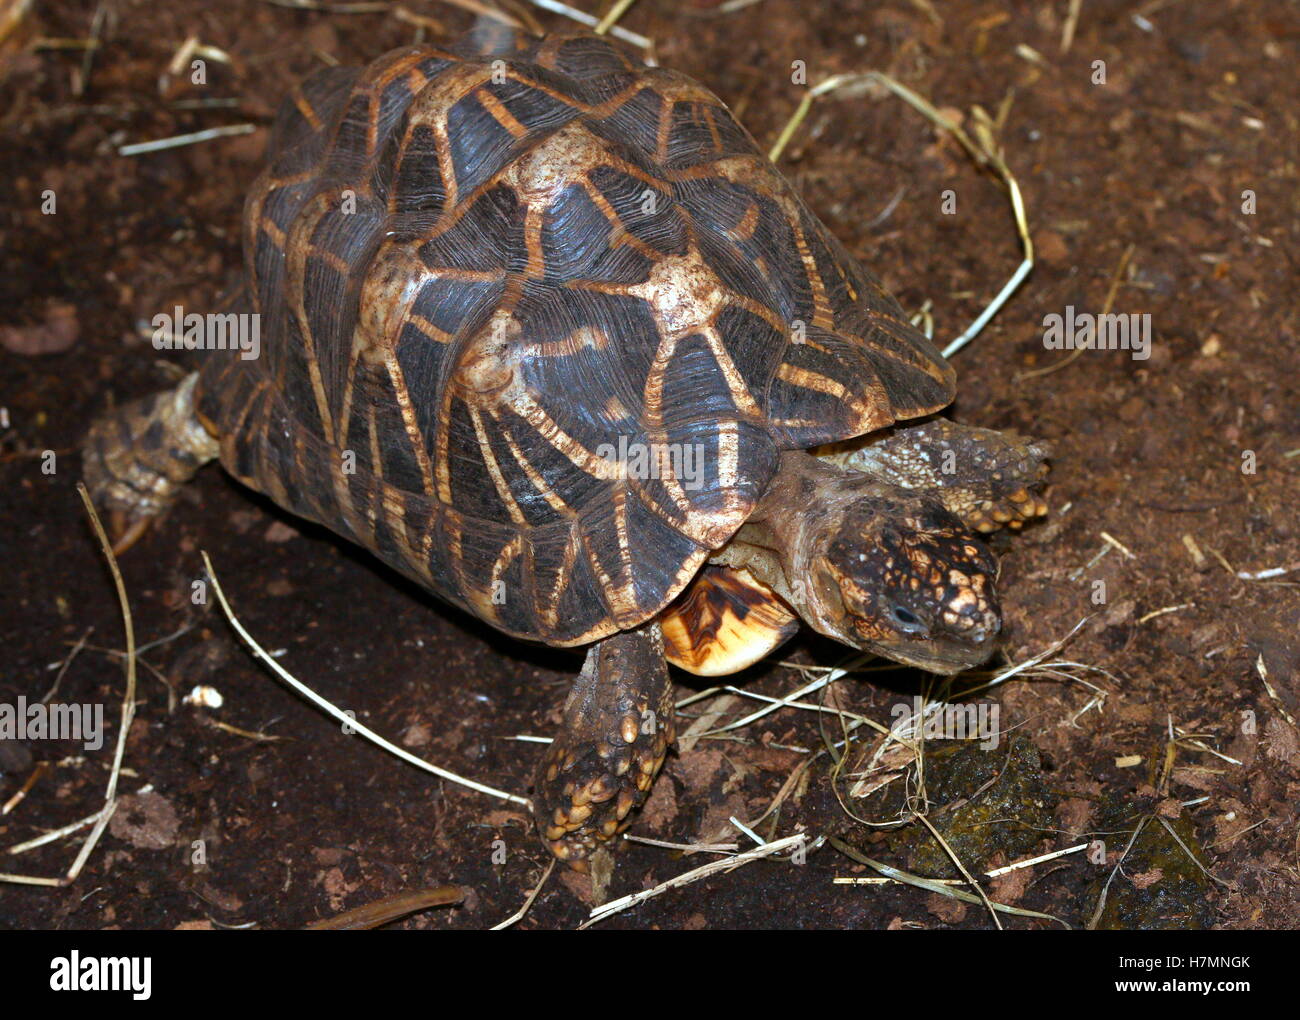 Indian star tortoise (Geochelone Elegans) Stock Photo